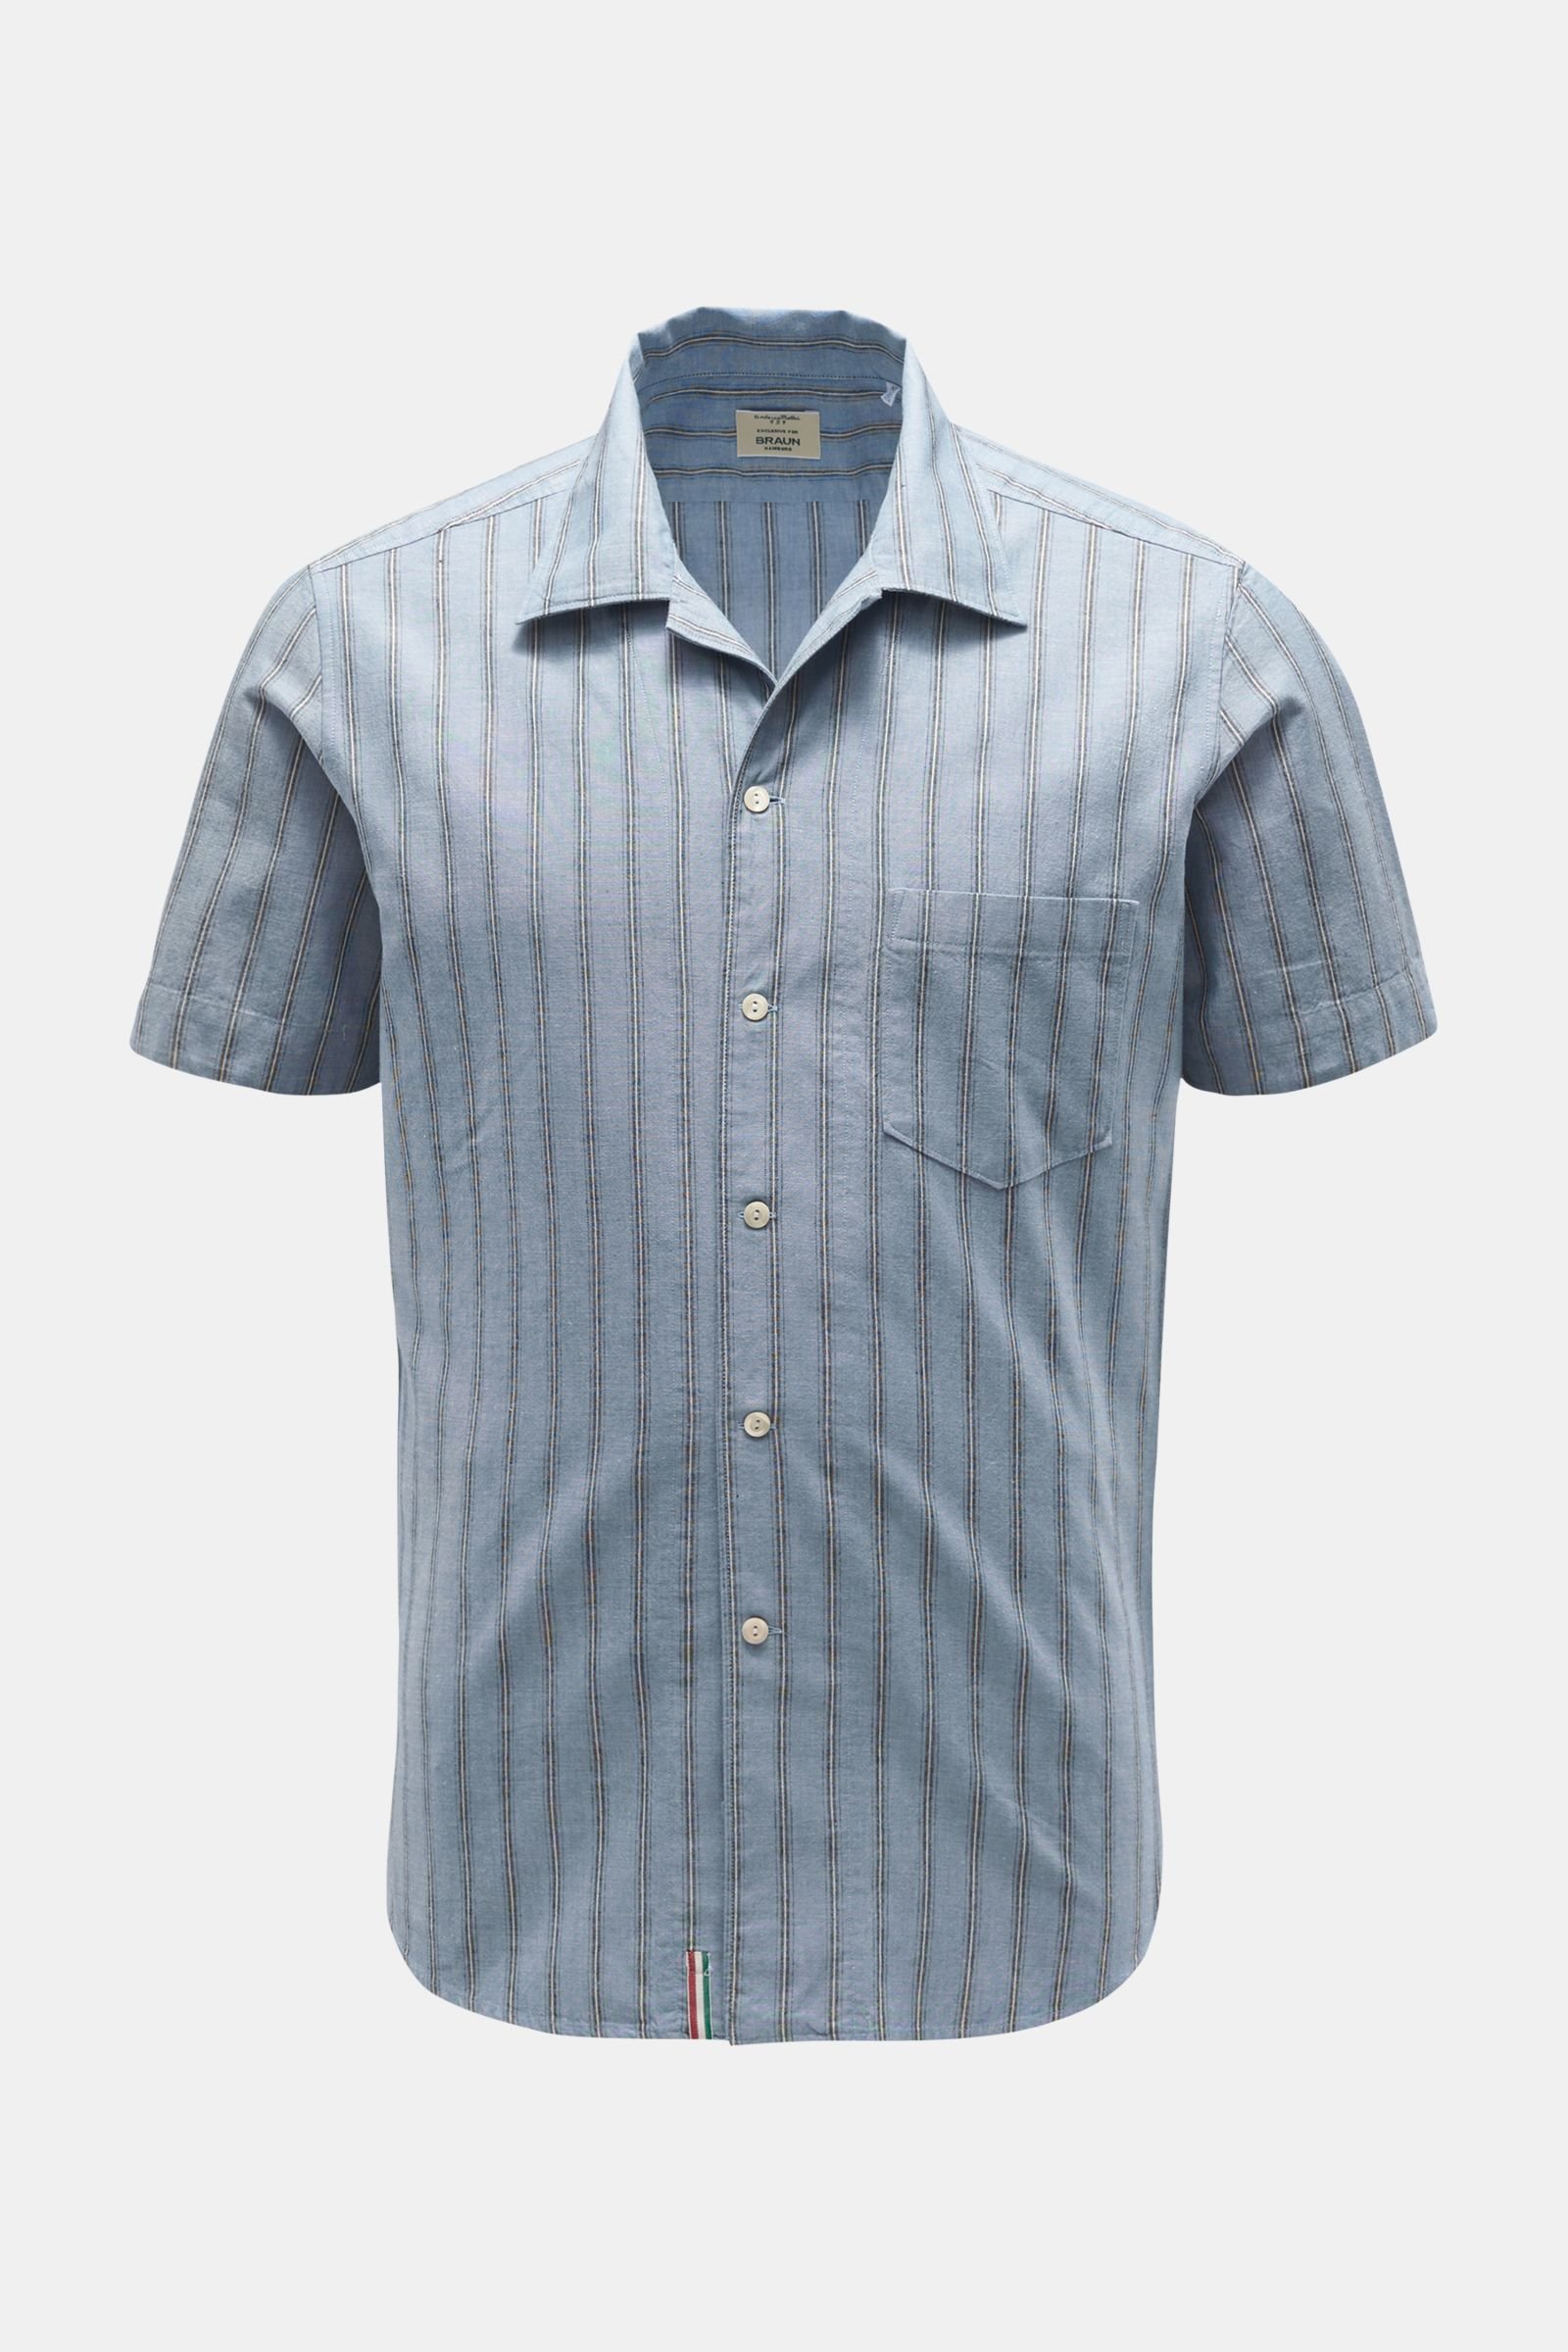 Short sleeve shirt English collar smoky blue/black striped